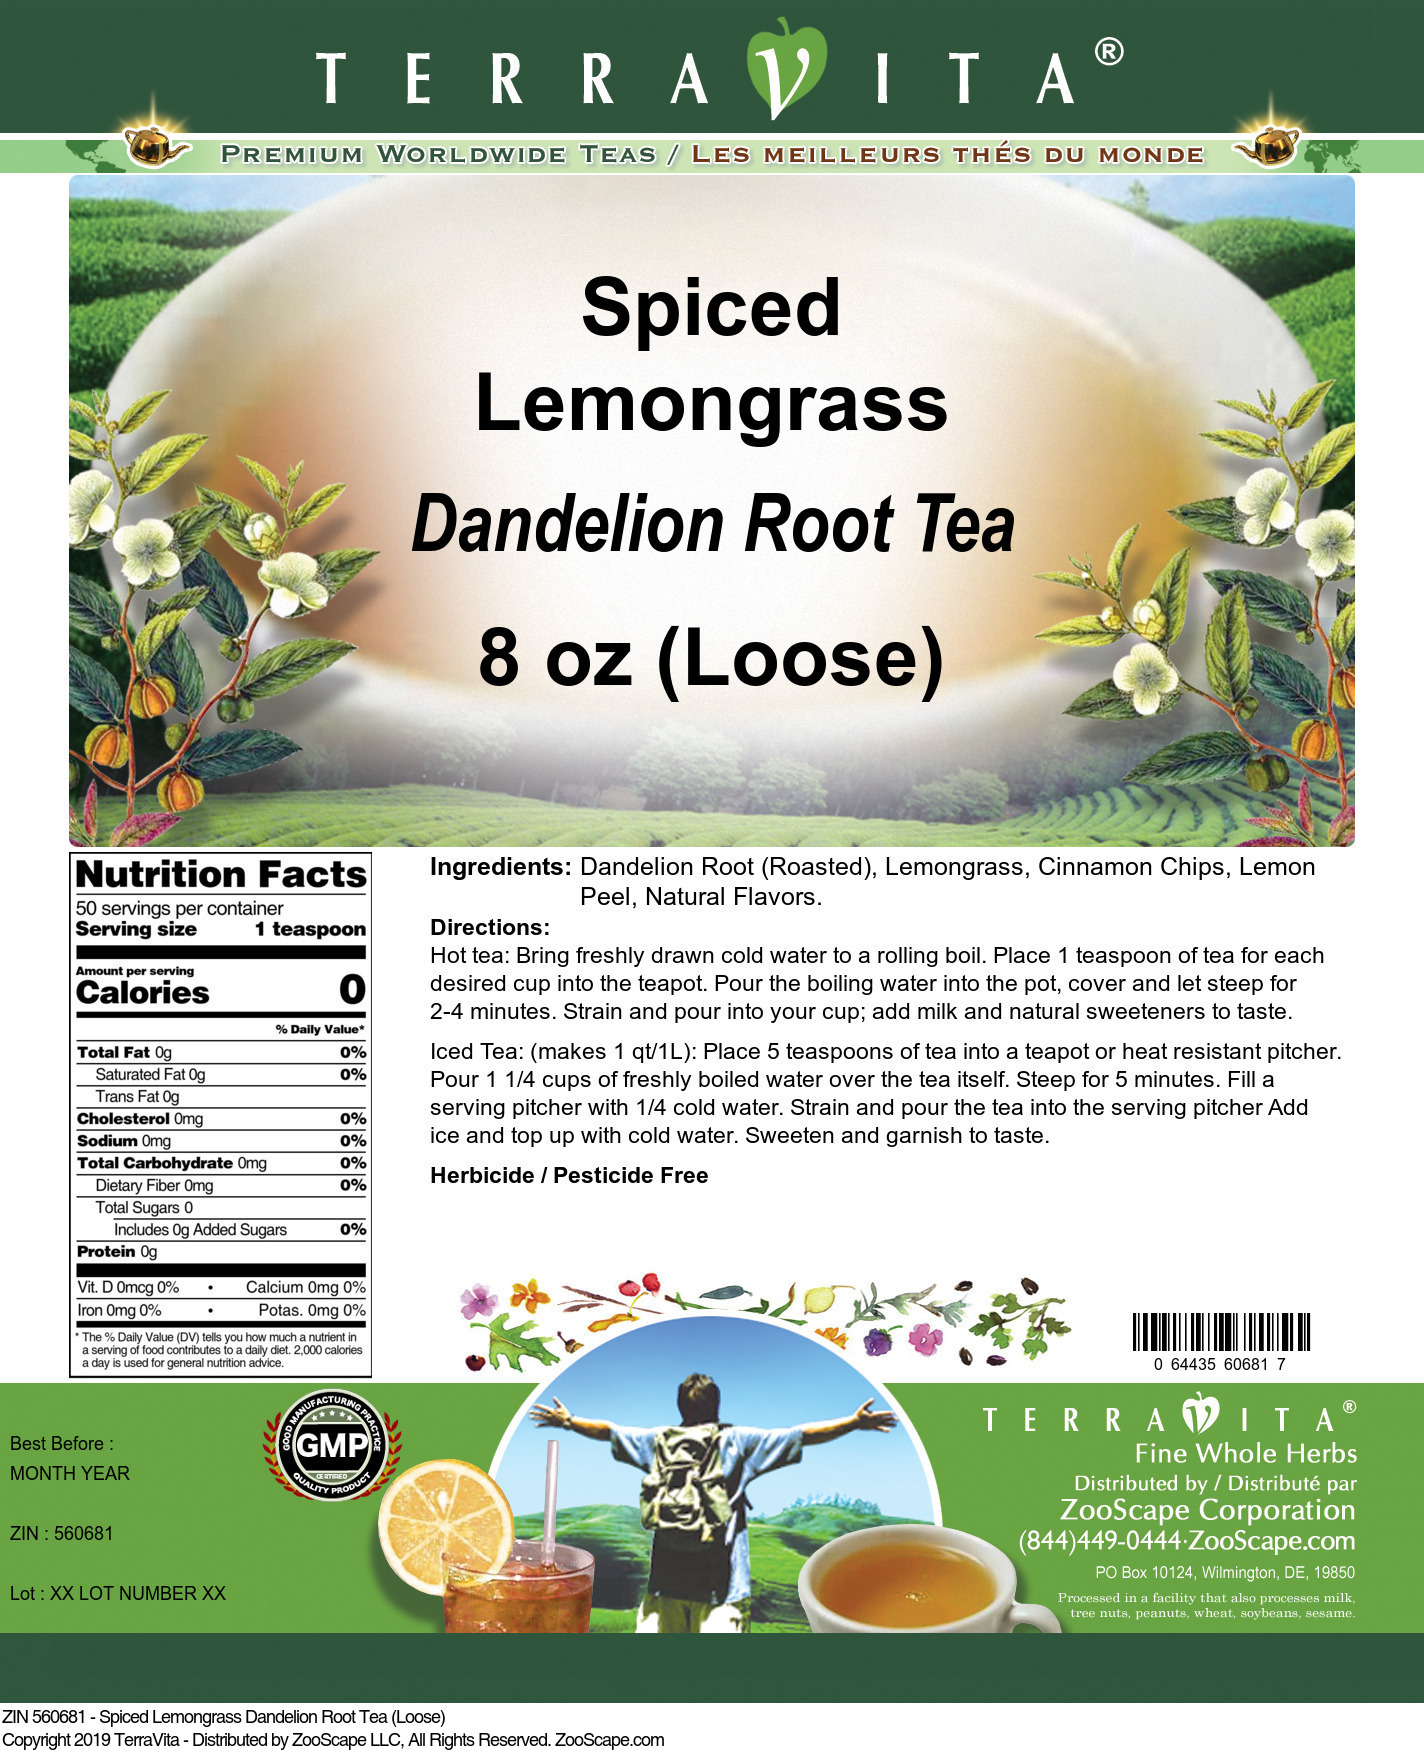 Spiced Lemongrass Dandelion Root Tea (Loose) - Label